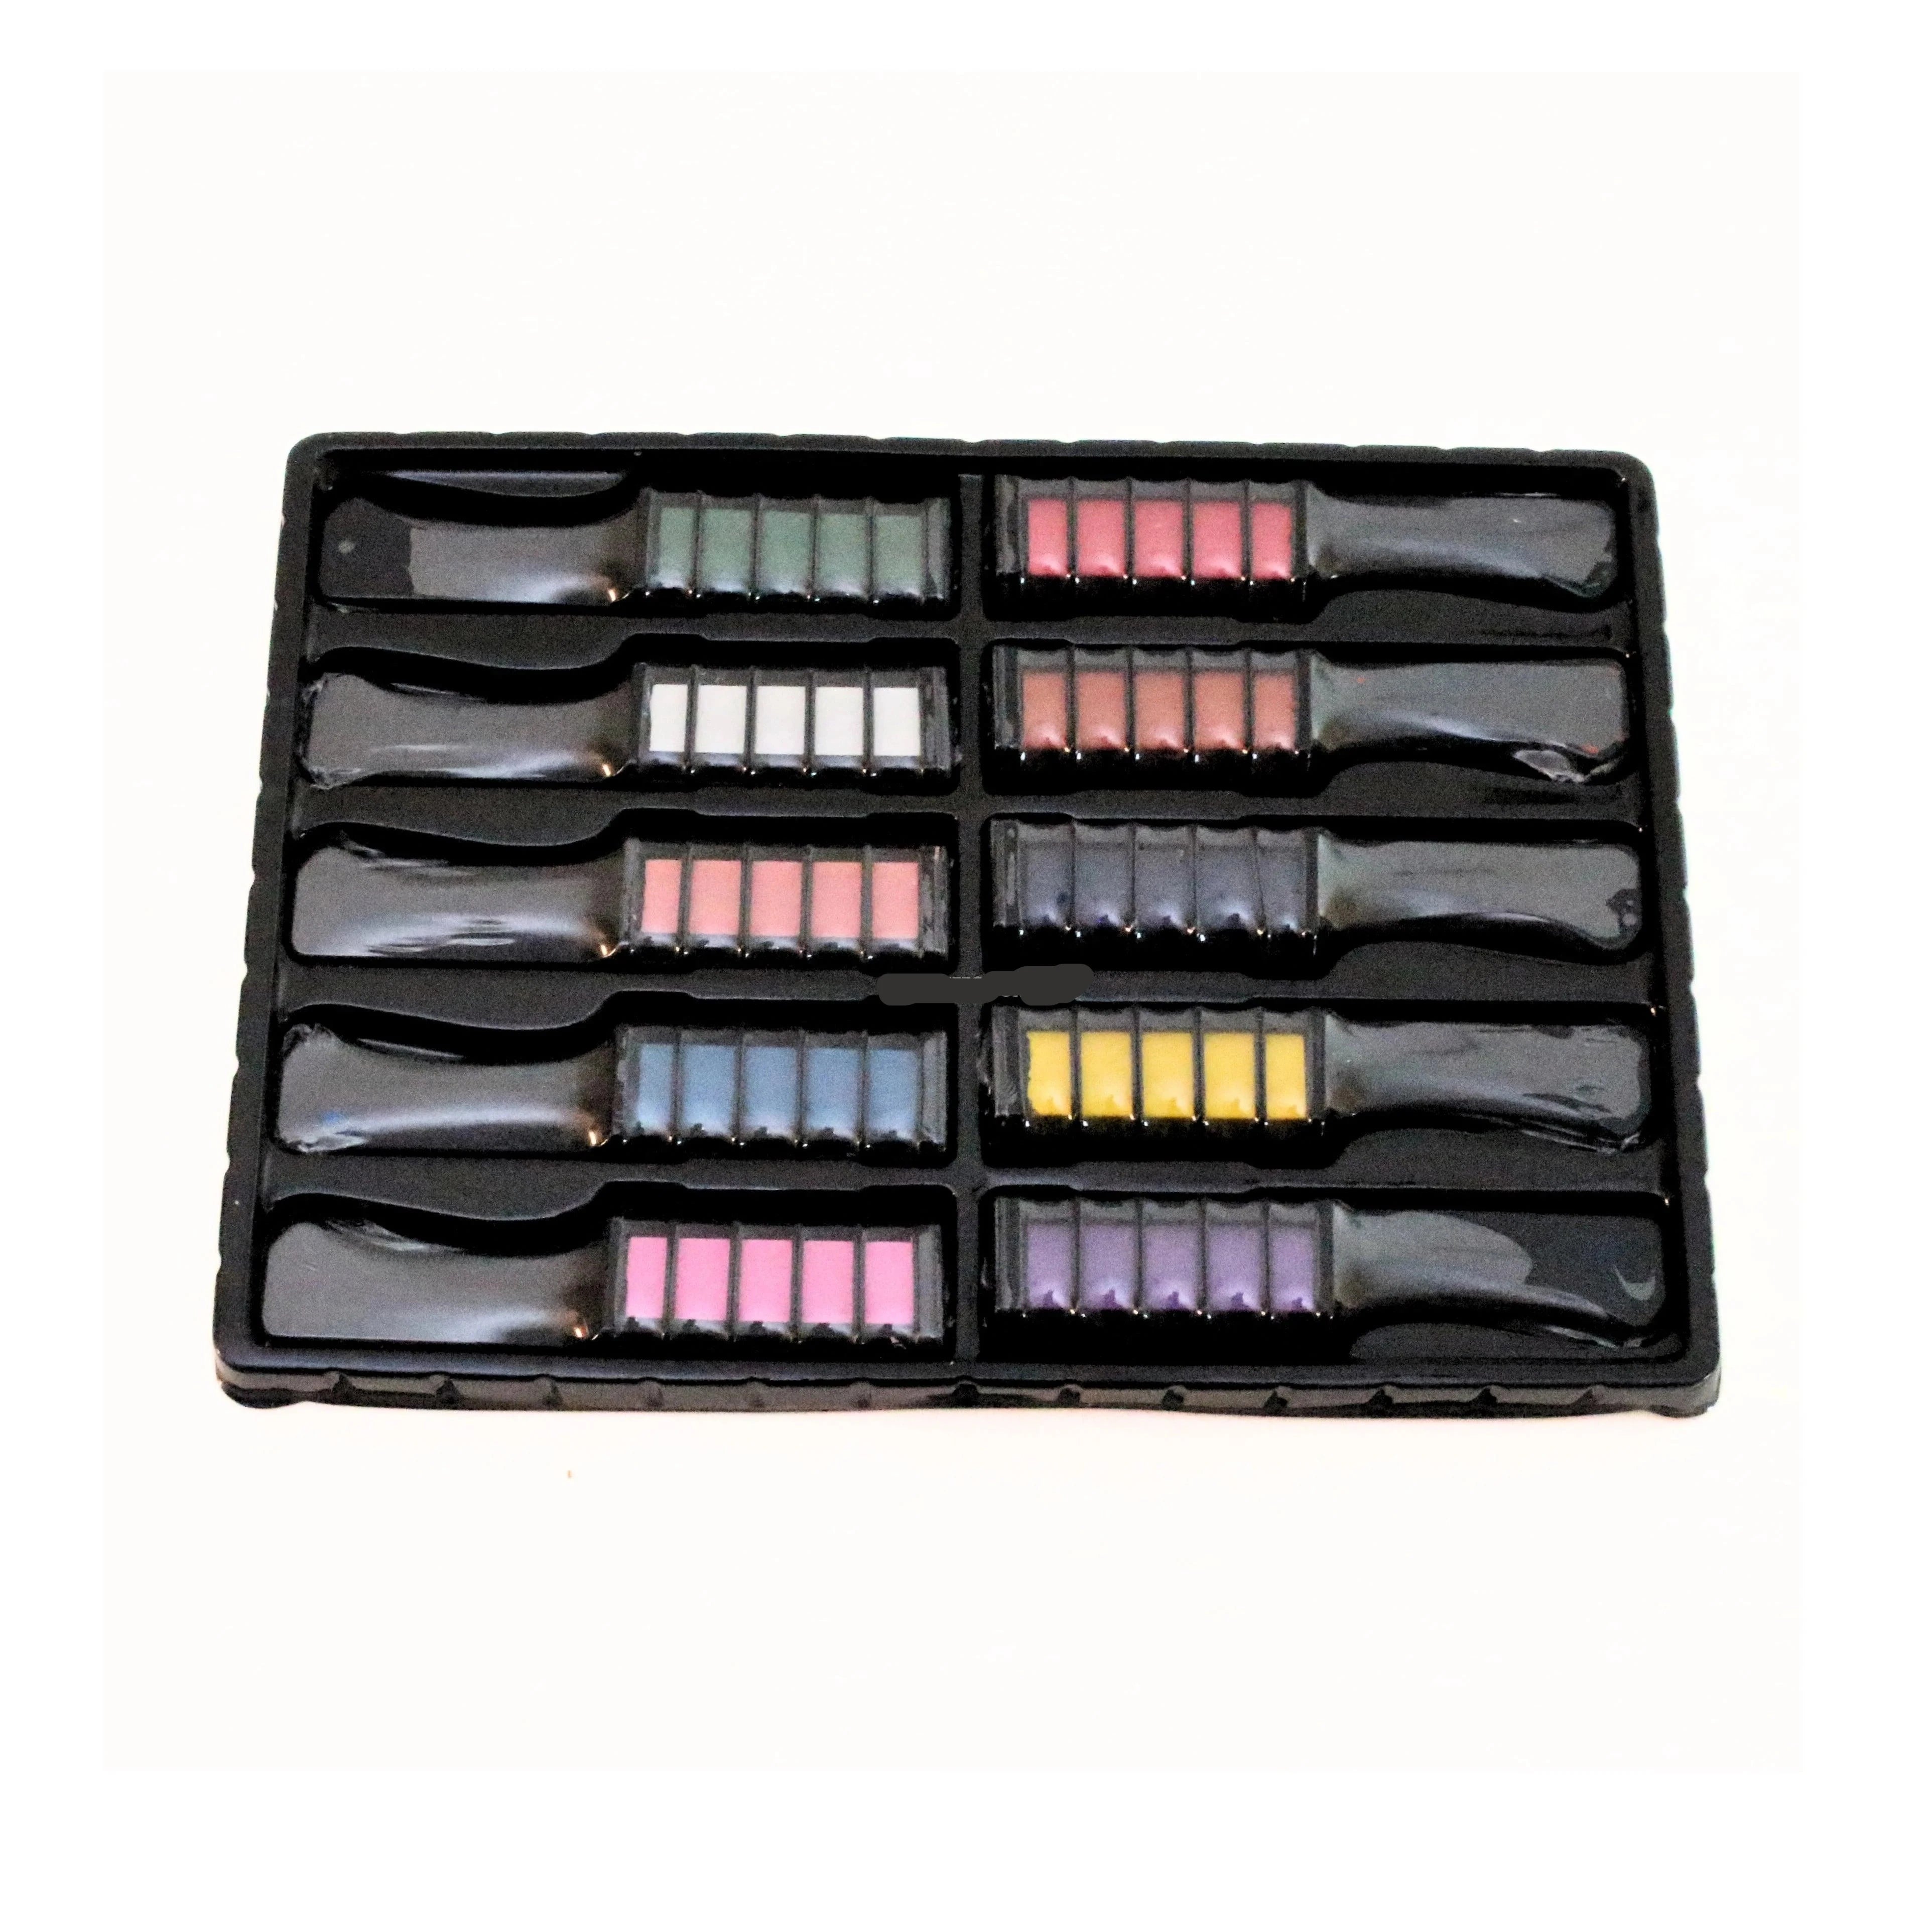 10 Pcs of Colorful Hair Dye Comb Set - Hair Chalks